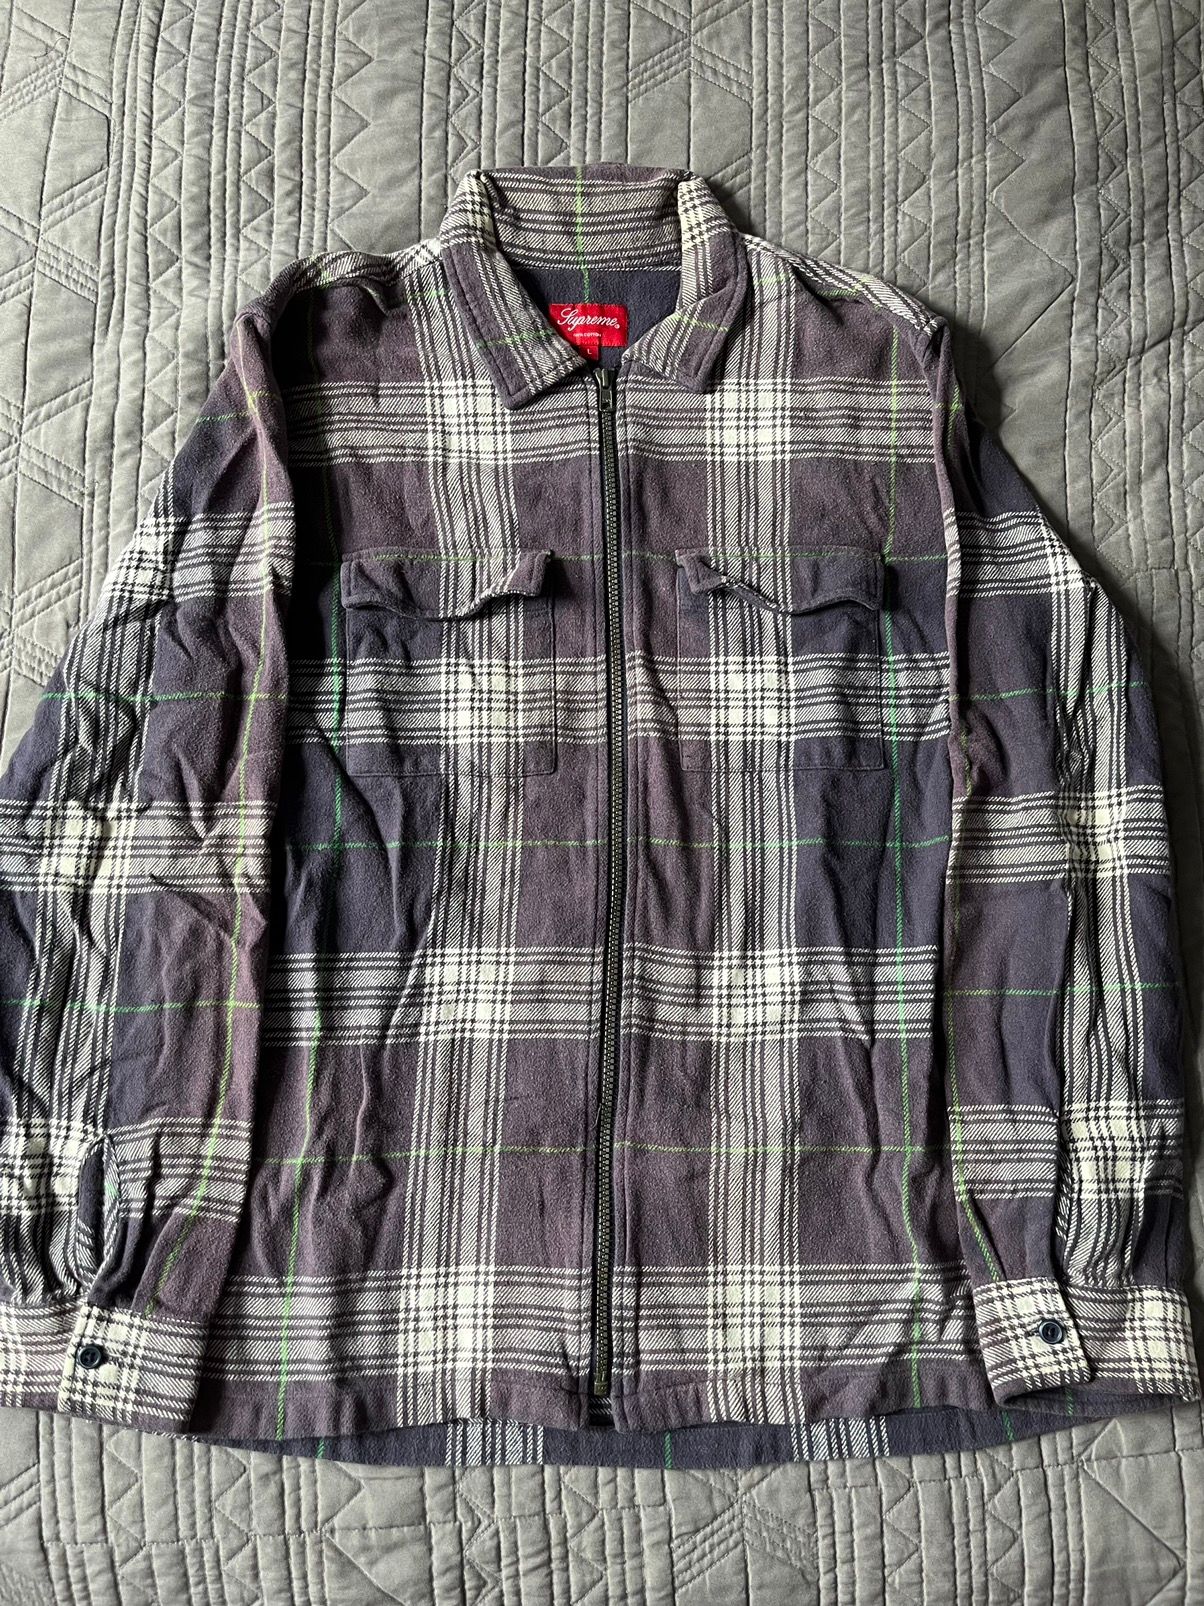 Supreme Supreme plaid flannel zip up shirt | Grailed